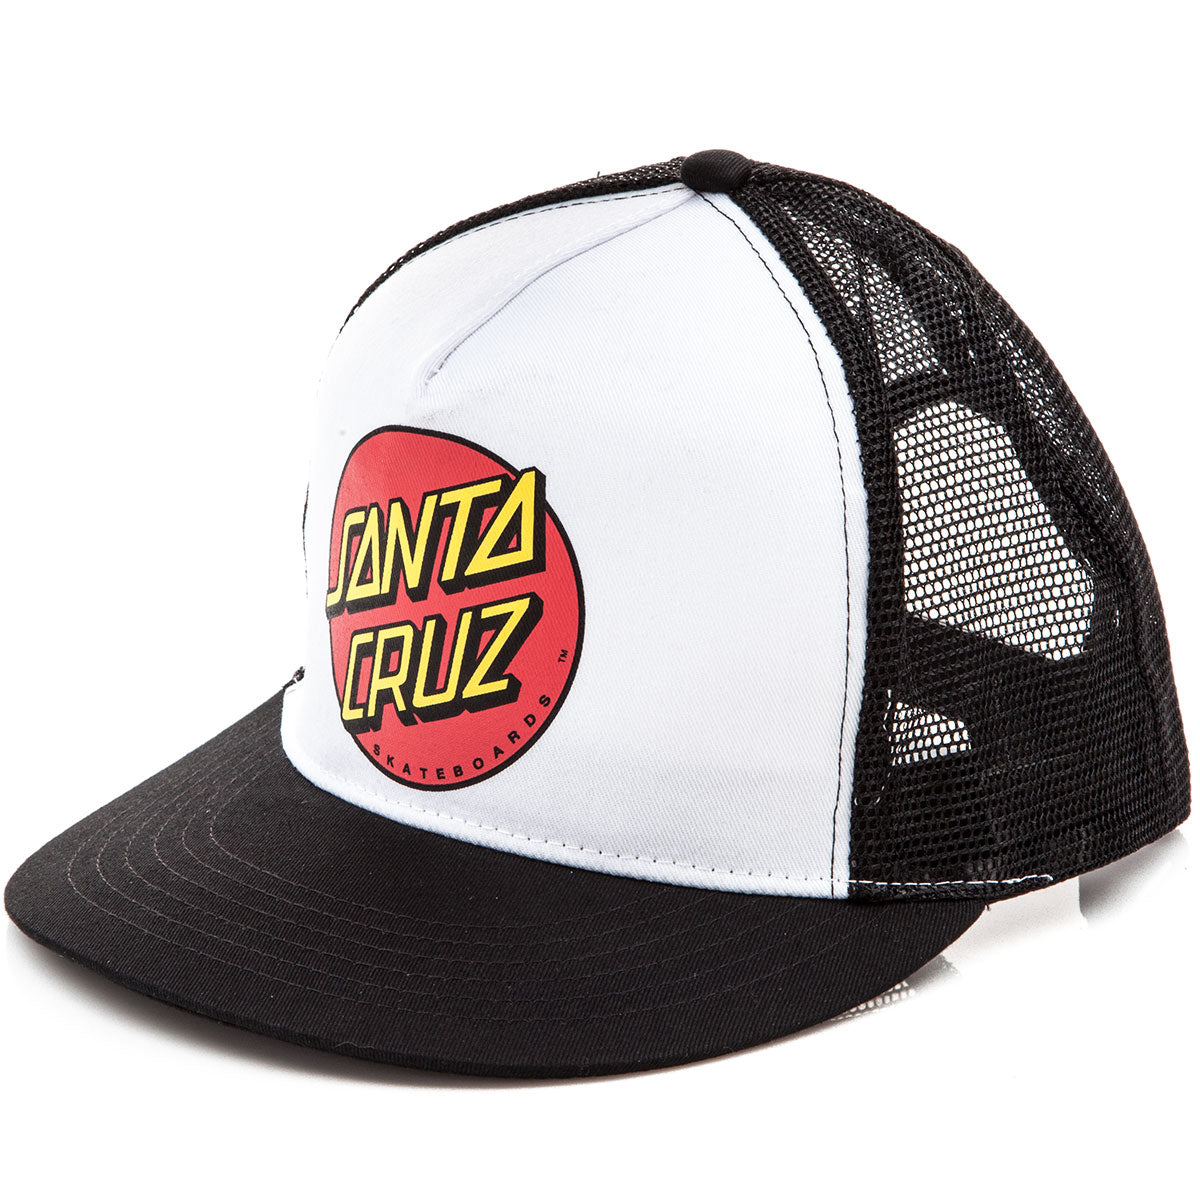 Santa Cruz Classic Dot Mesh Trucker Hat - Black/White image 1